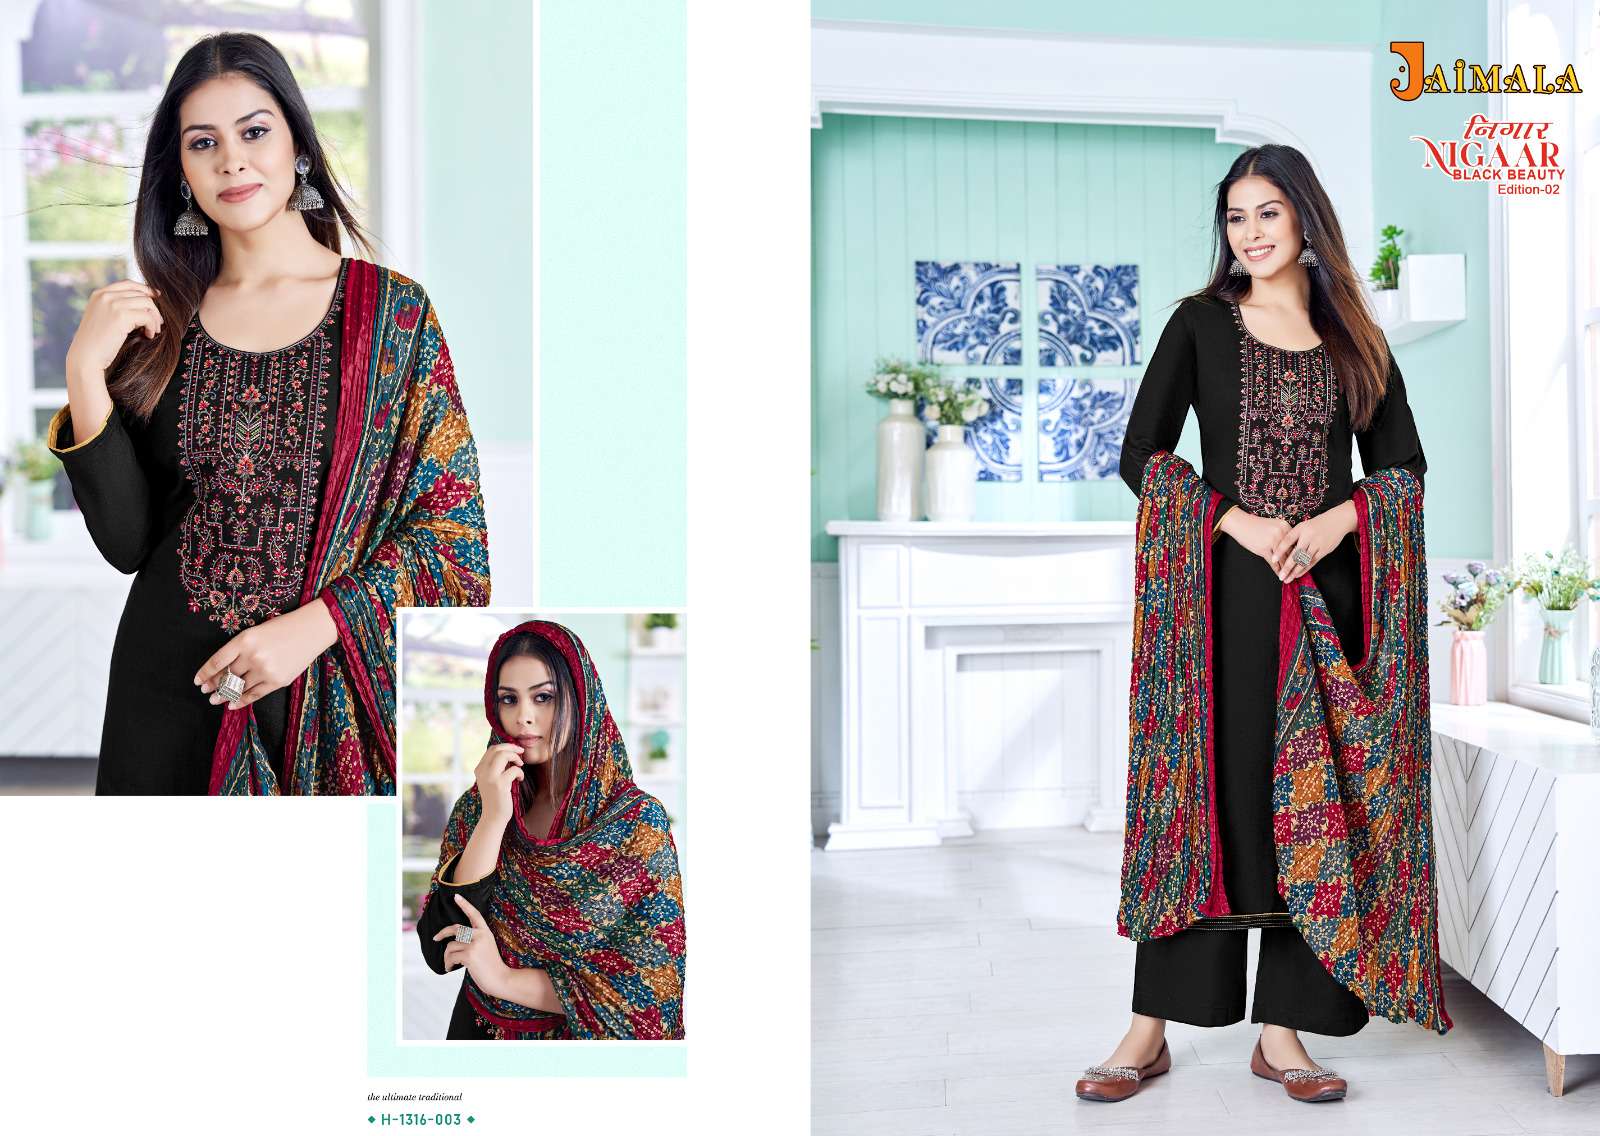 jaimala nigaar black beauty edition vol-2 unstitched designer salwar suits dress material catalogue surat 